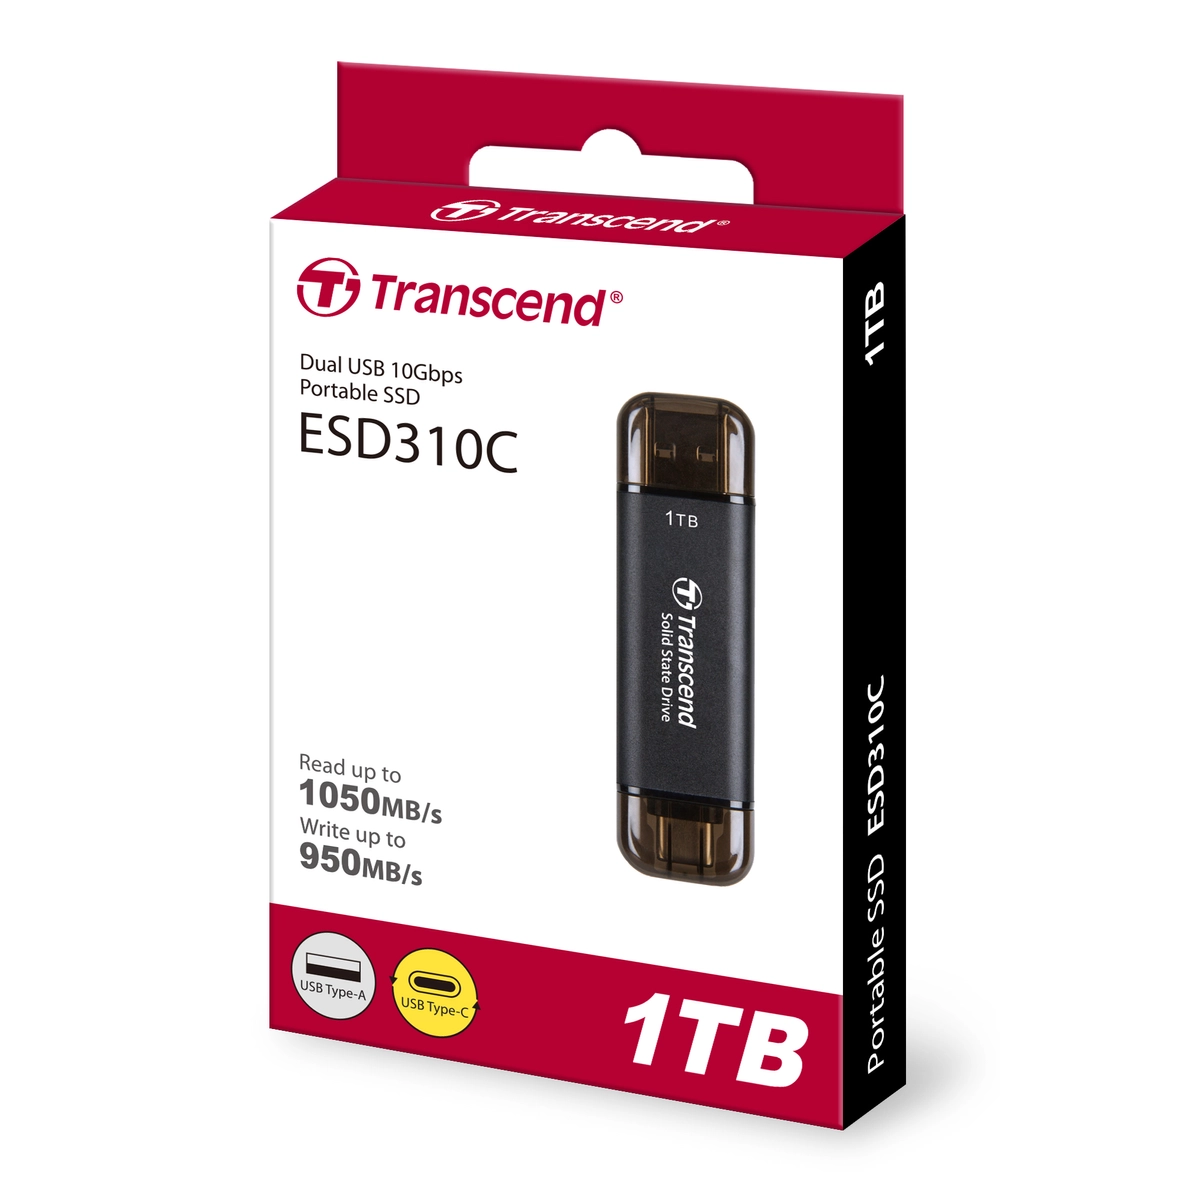 ESD240C Portable SSD  Portable SSDs - Transcend Information, Inc.